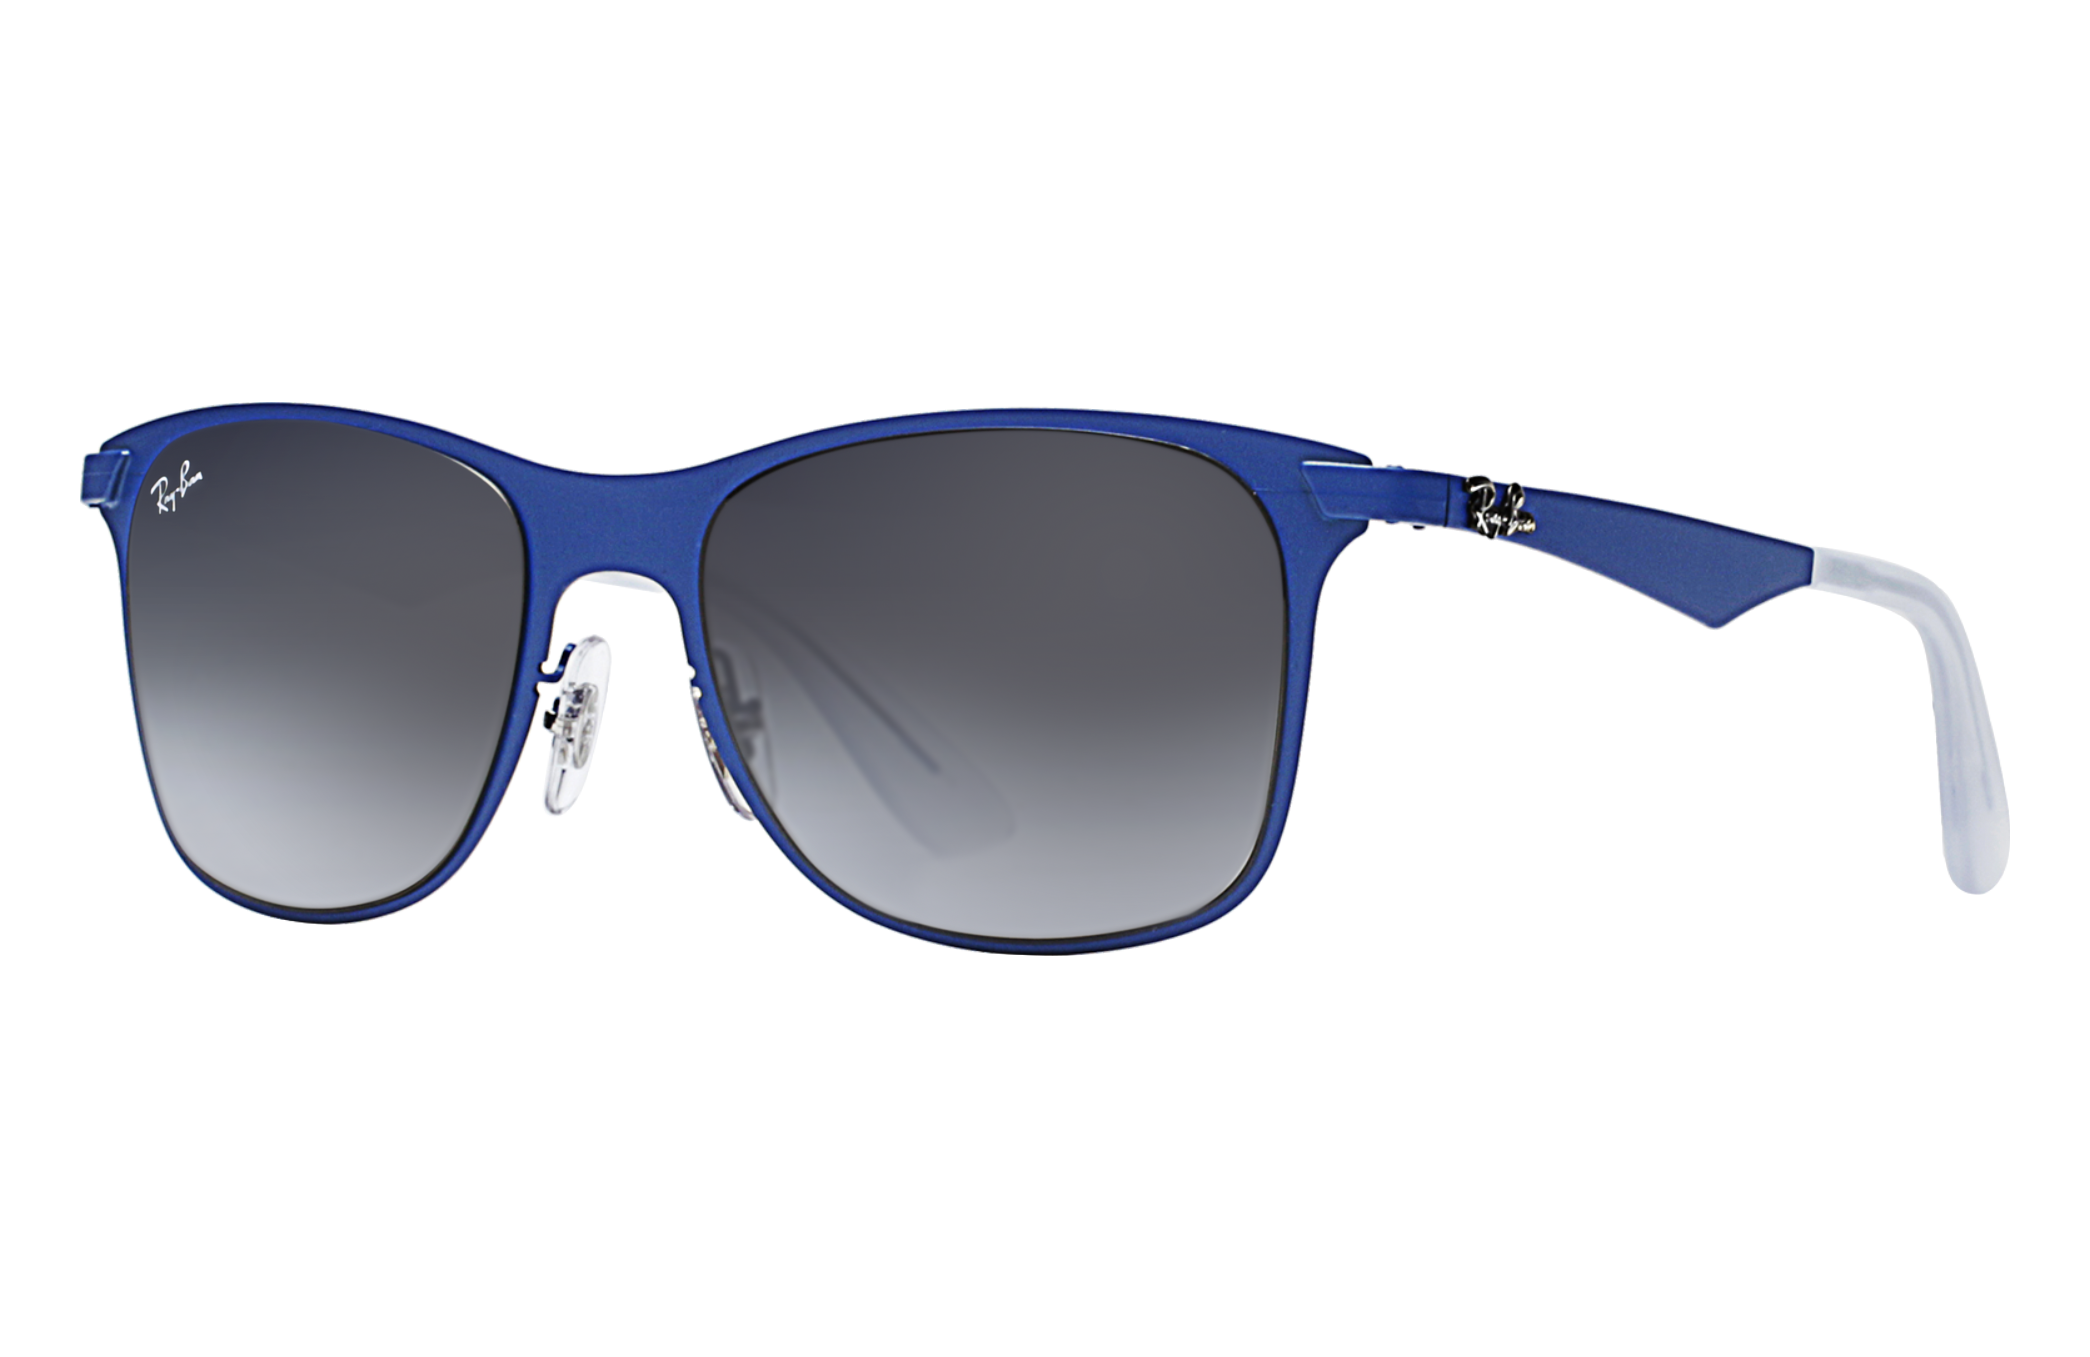 Wayfarer Flat Metal Sunglasses in Blue and Grey - RB3521 | Ray-Ban®